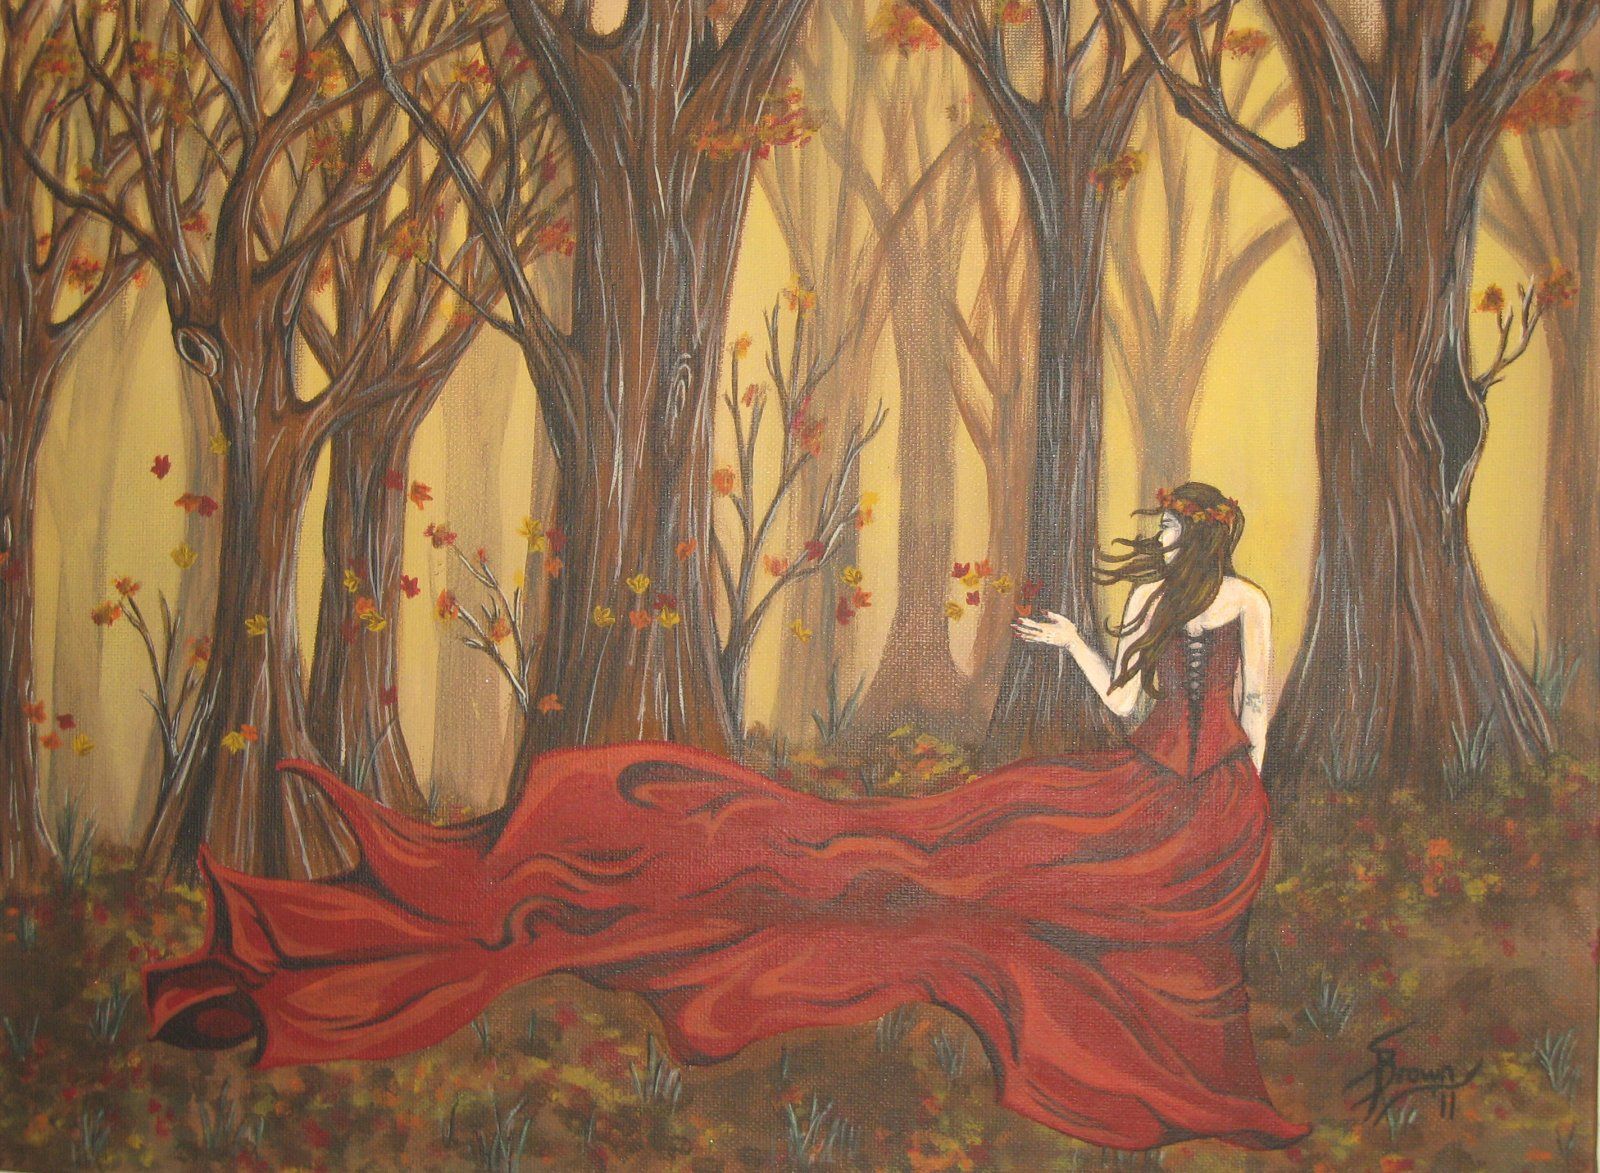 Autumn Graphics Picture: Autumn Goddess Image